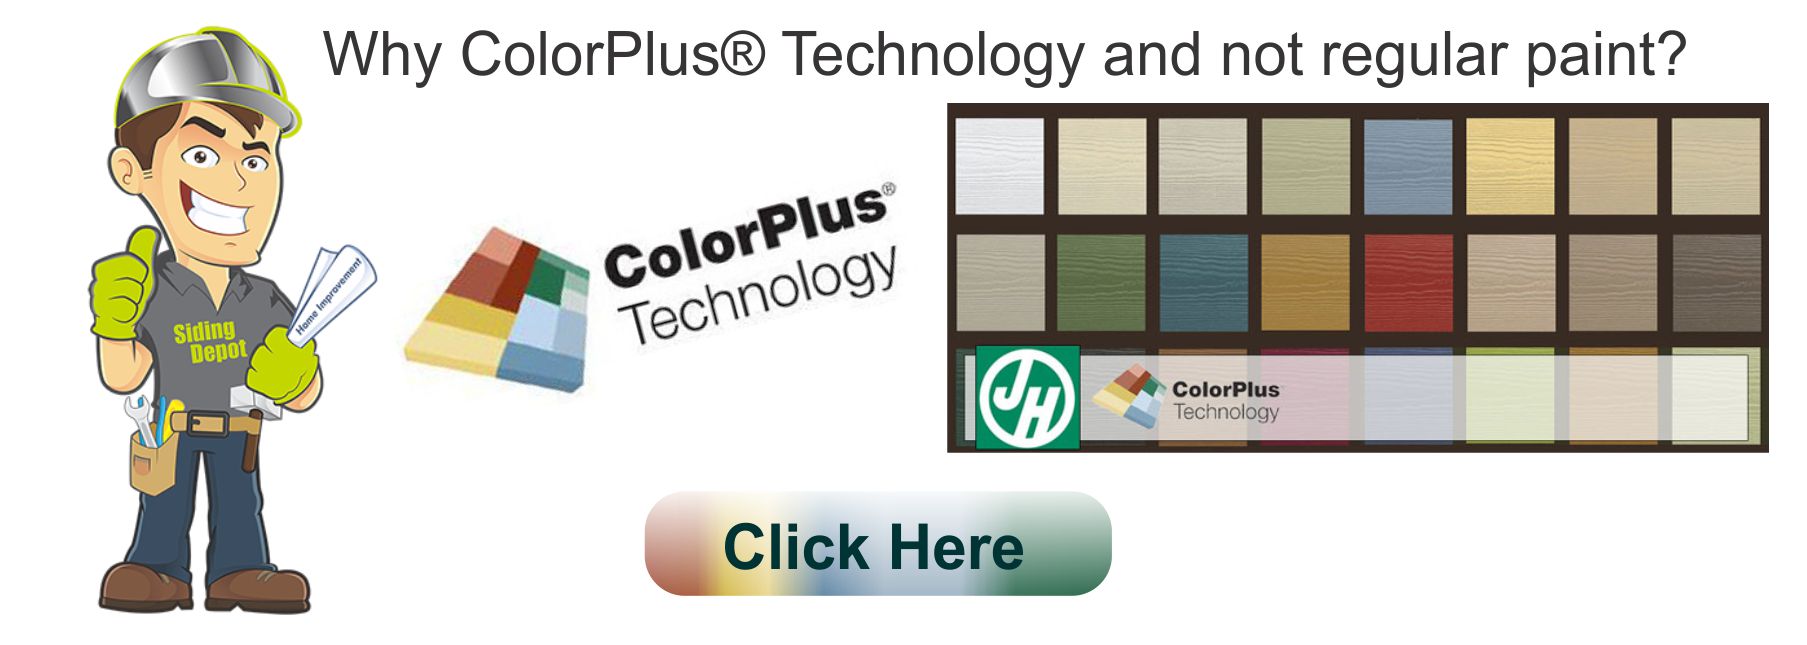 Colorplus Technology